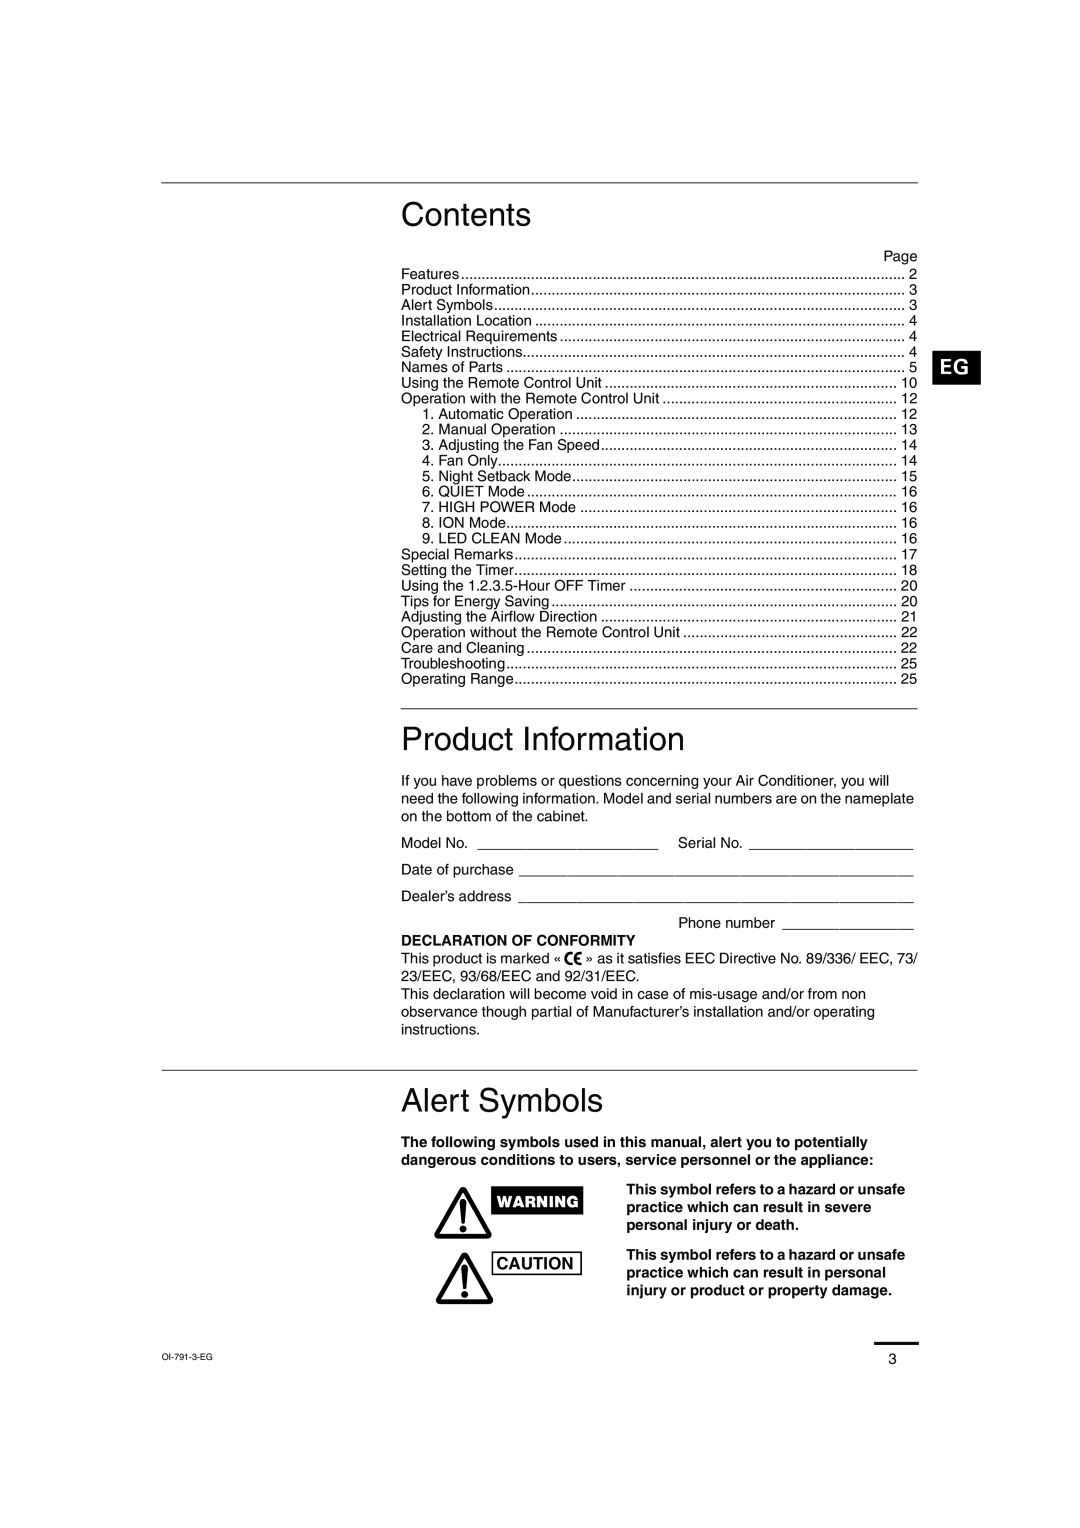 Sanyo SAP-KRV94EHDX service manual Contents, Product Information, Alert Symbols 